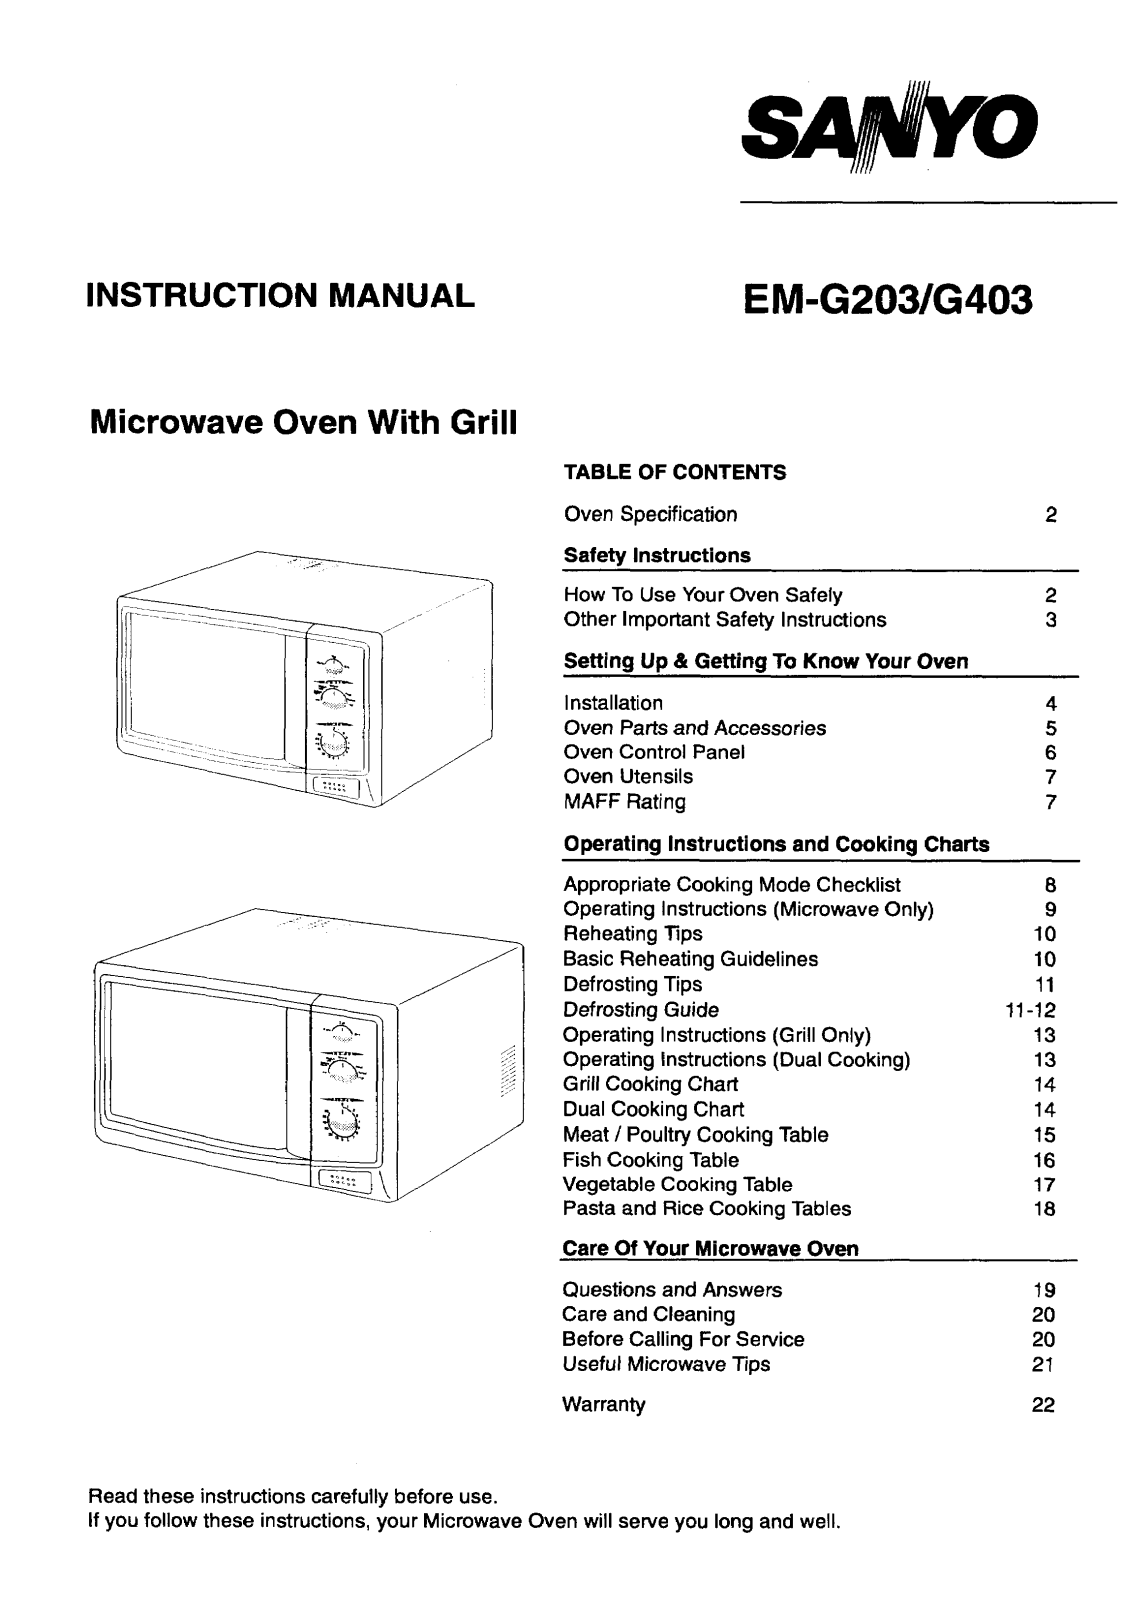 Sanyo EM-G403, EM-G203 Instruction Manual